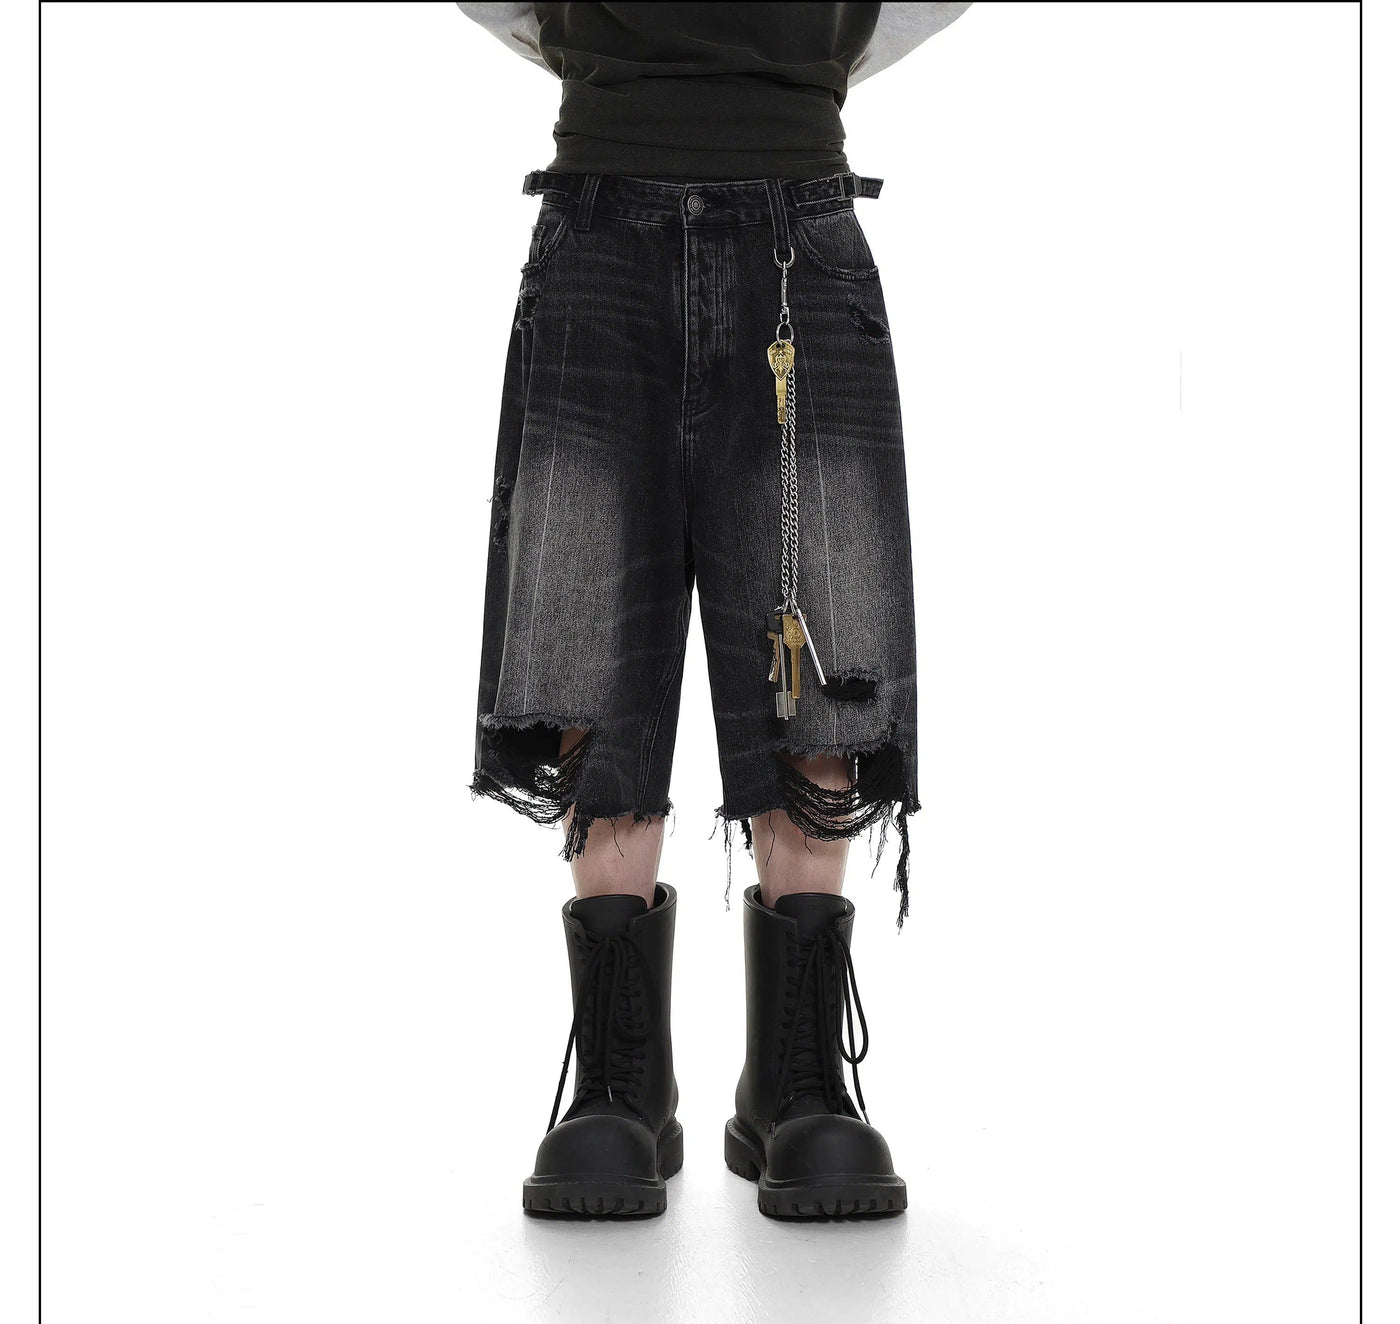 Scattered Distress Denim Shorts Korean Street Fashion Shorts By Mason Prince Shop Online at OH Vault